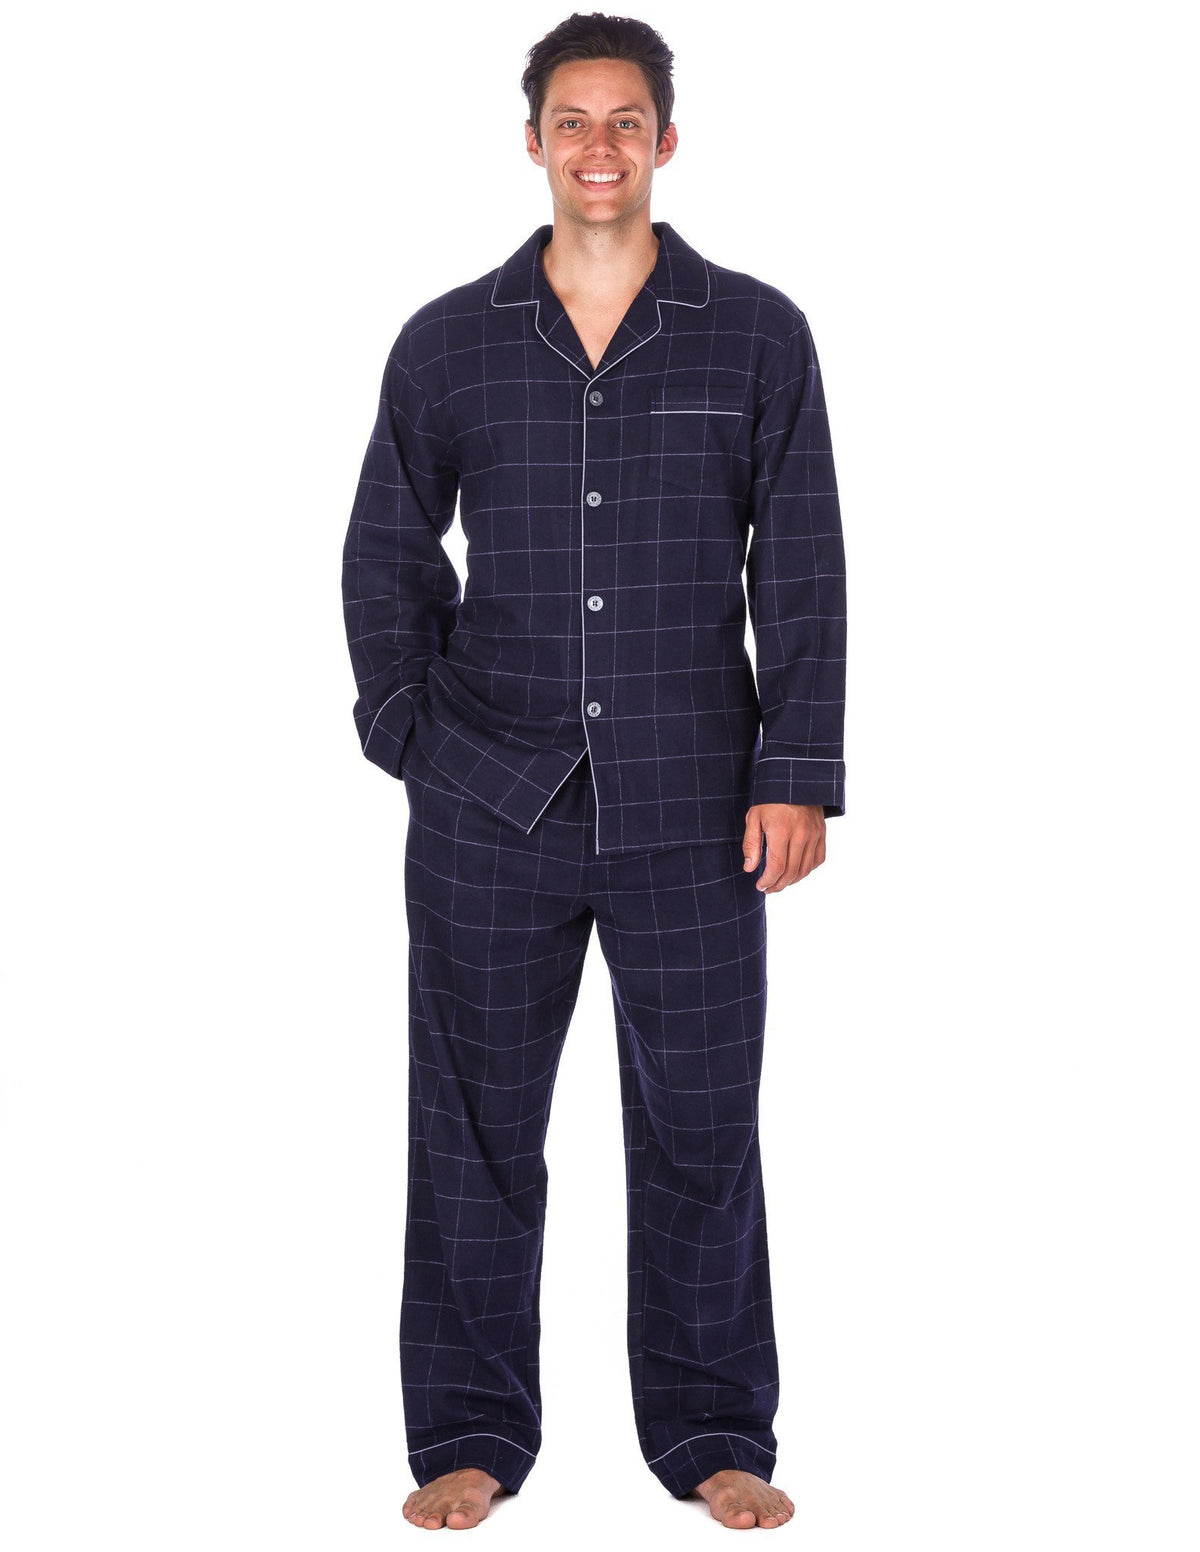 Men's Premium 100% Cotton Flannel Pajama Sleepwear Set (Relaxed Fit) - Blue